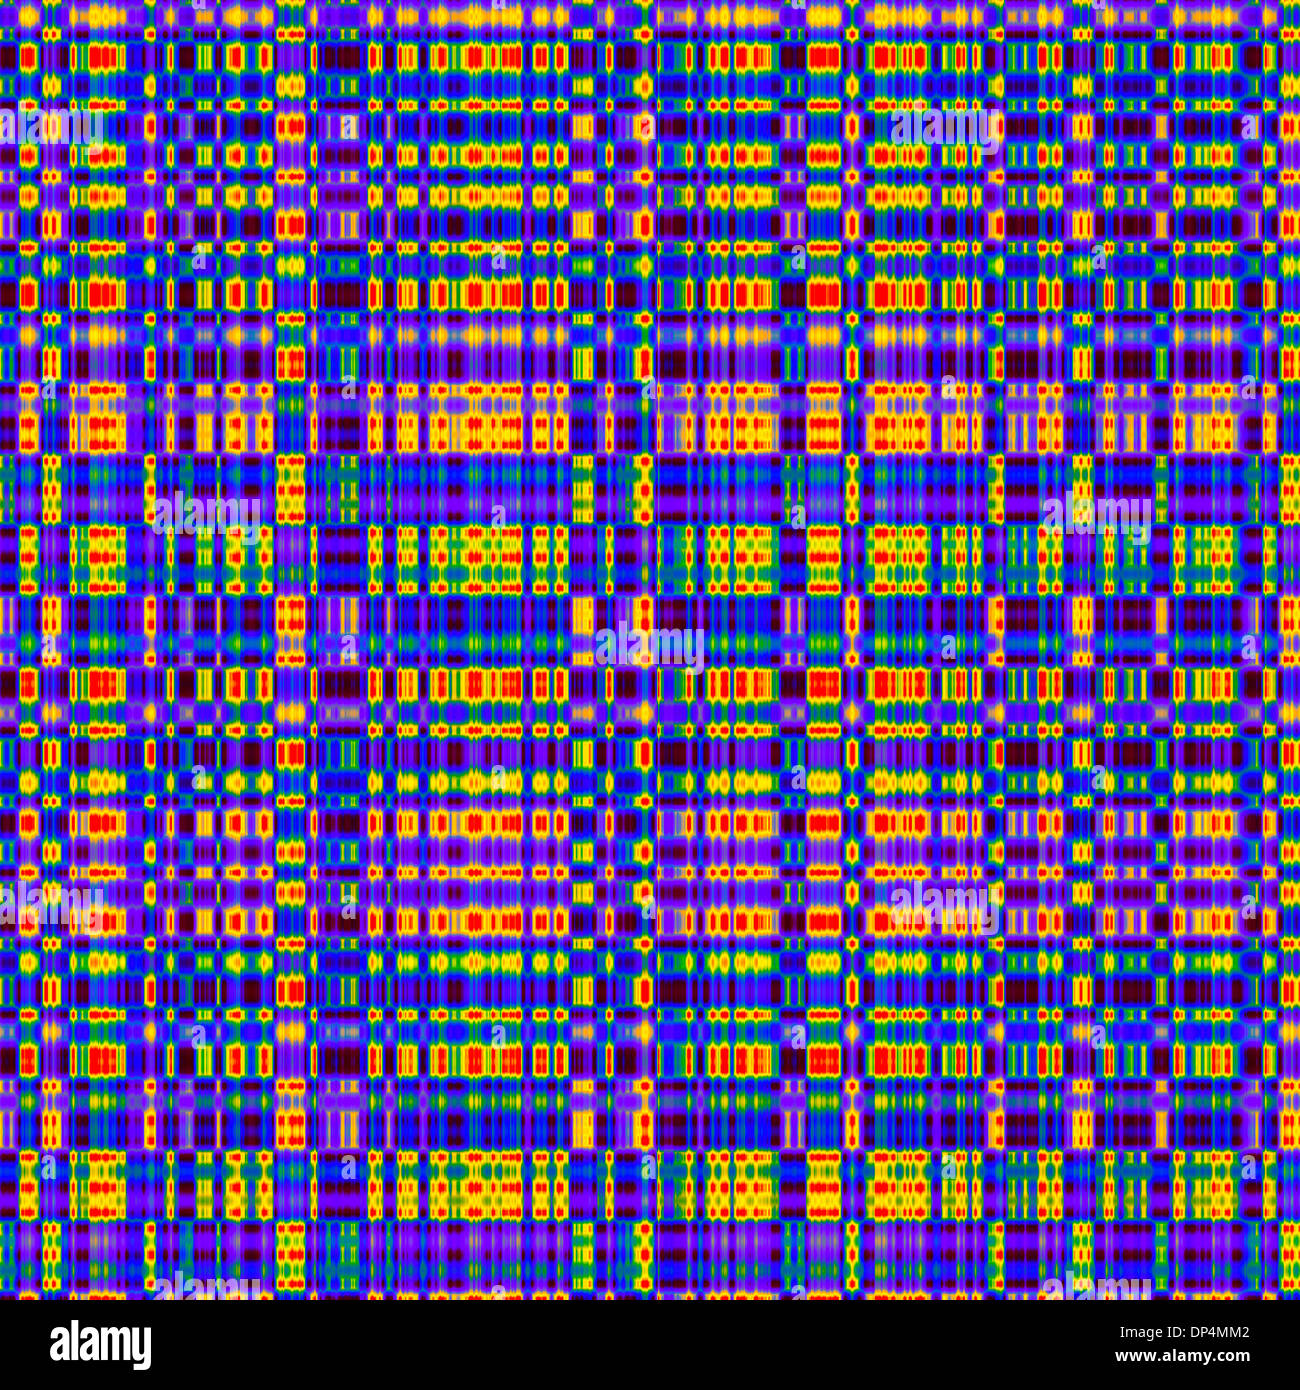 DNA sequence, artwork Stock Photo